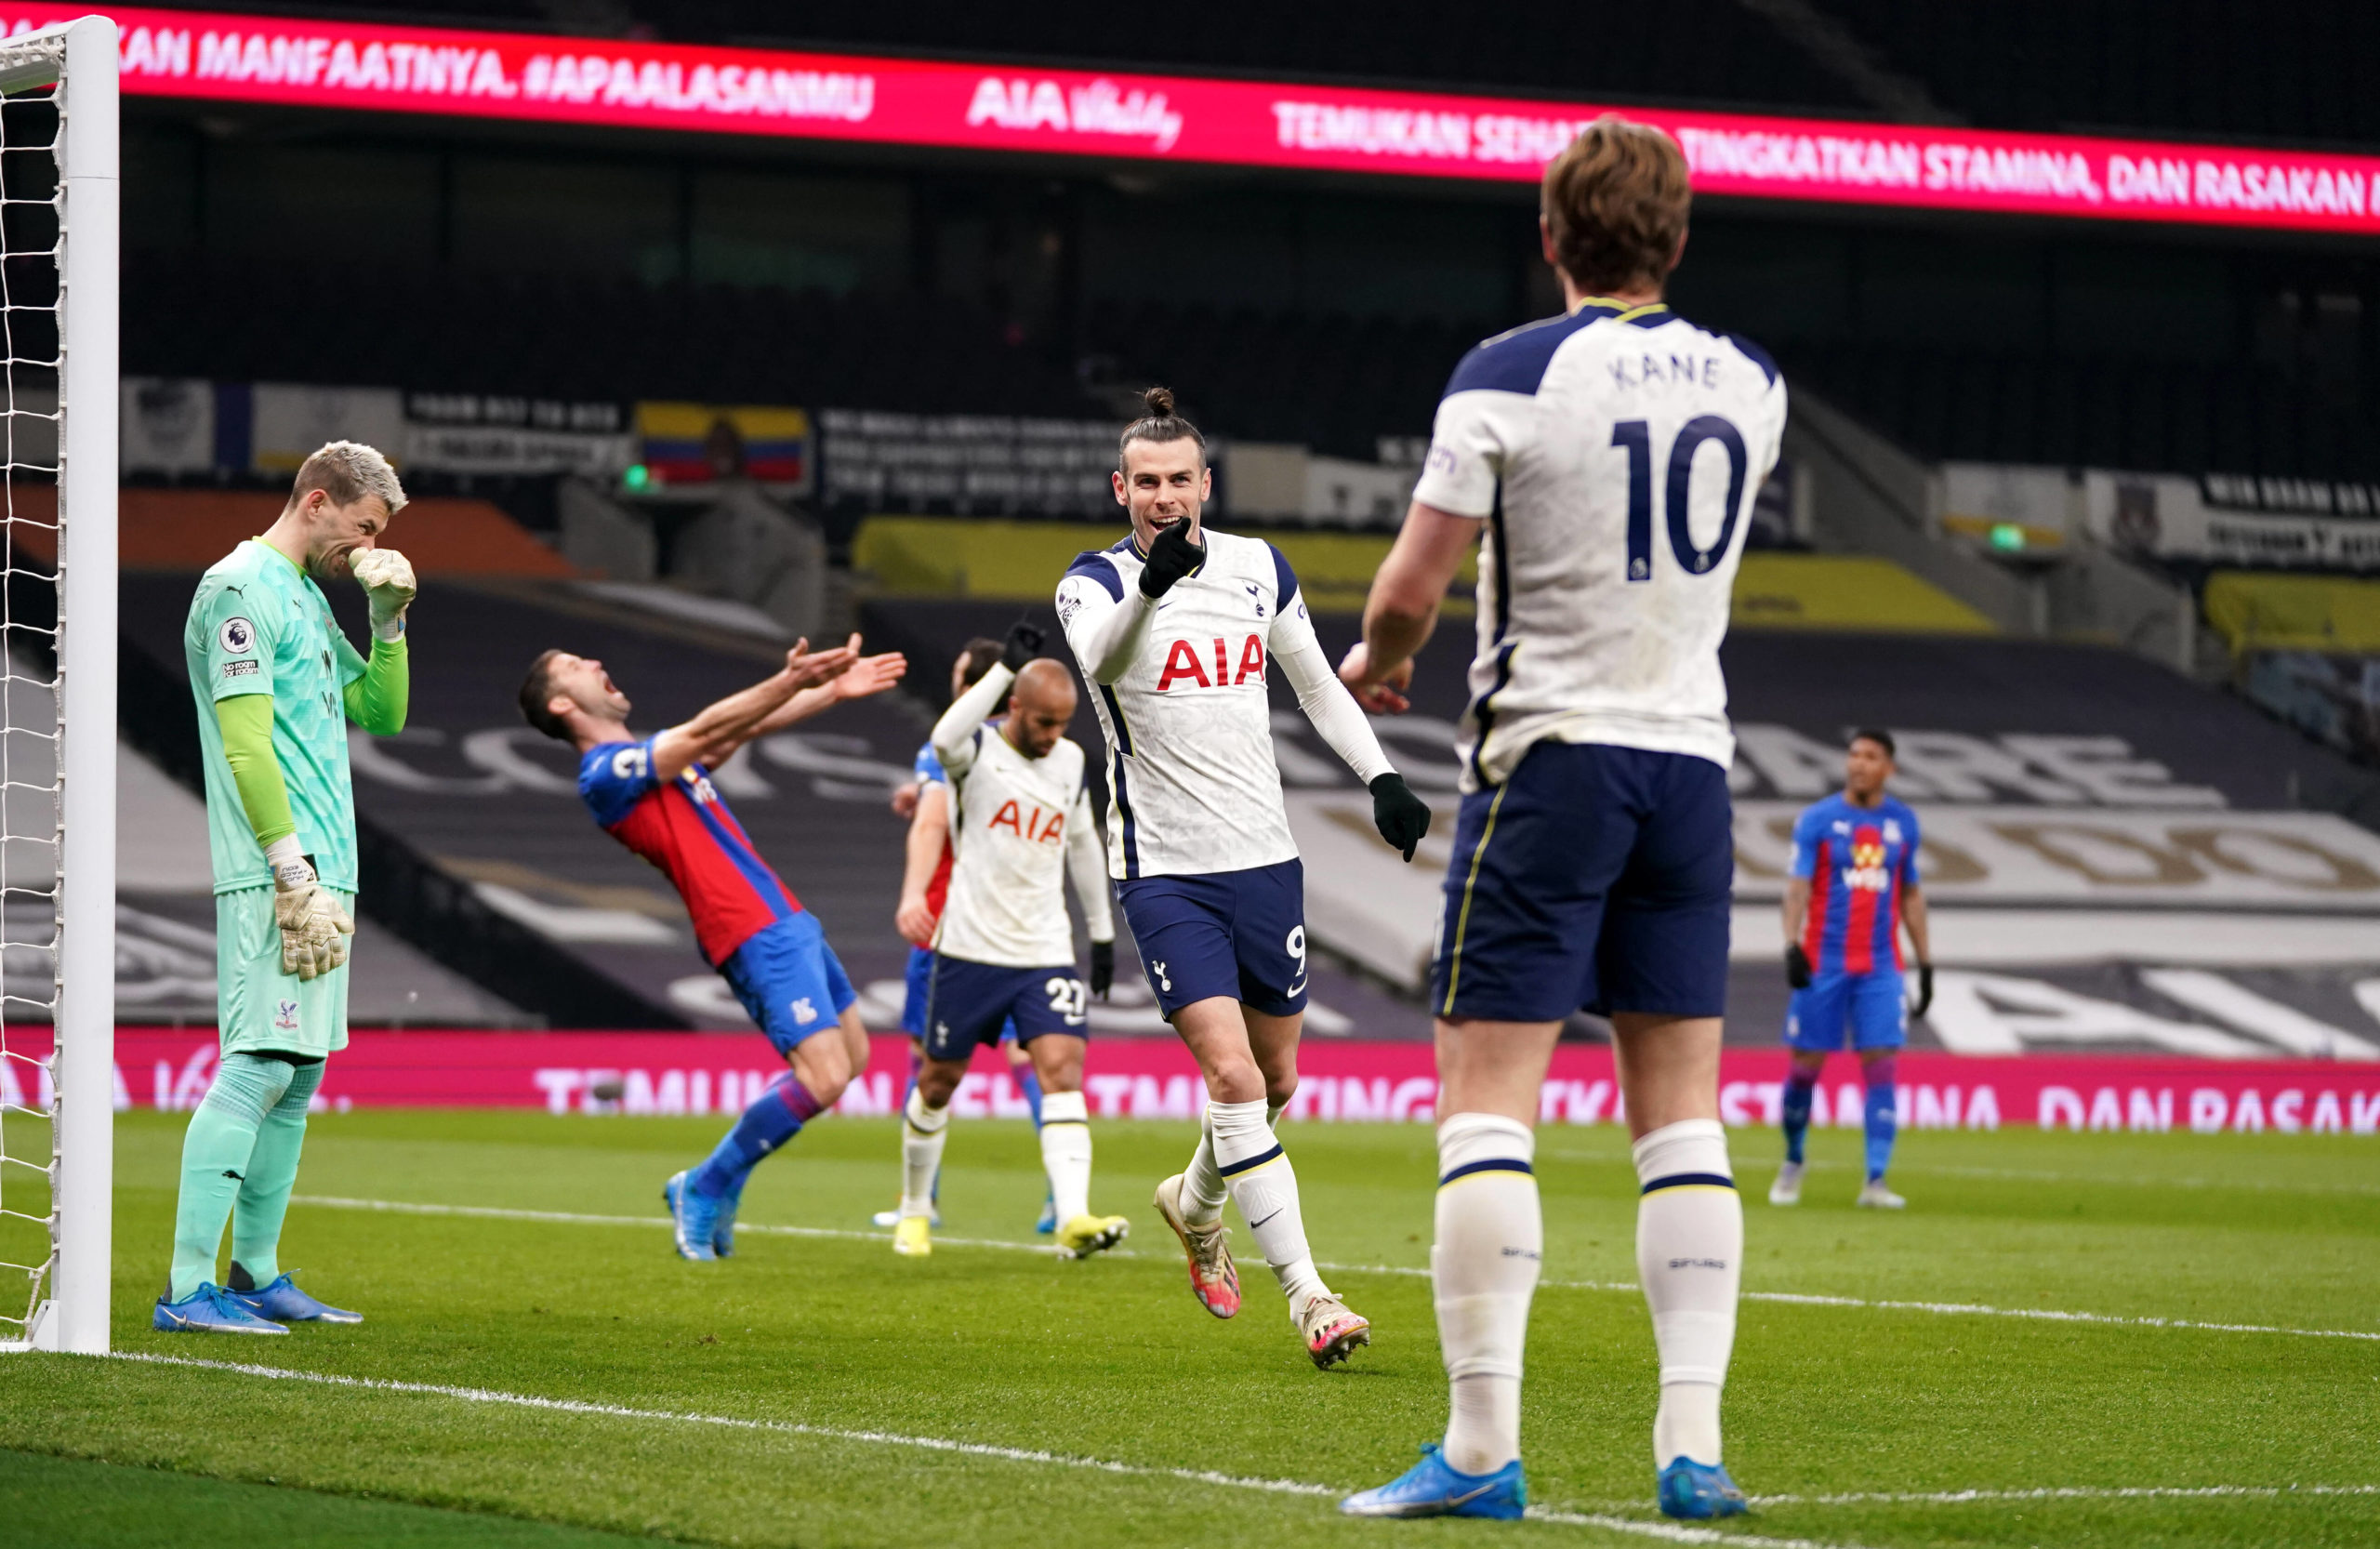 Tottenham Hotspur players celebrate scoring a goal